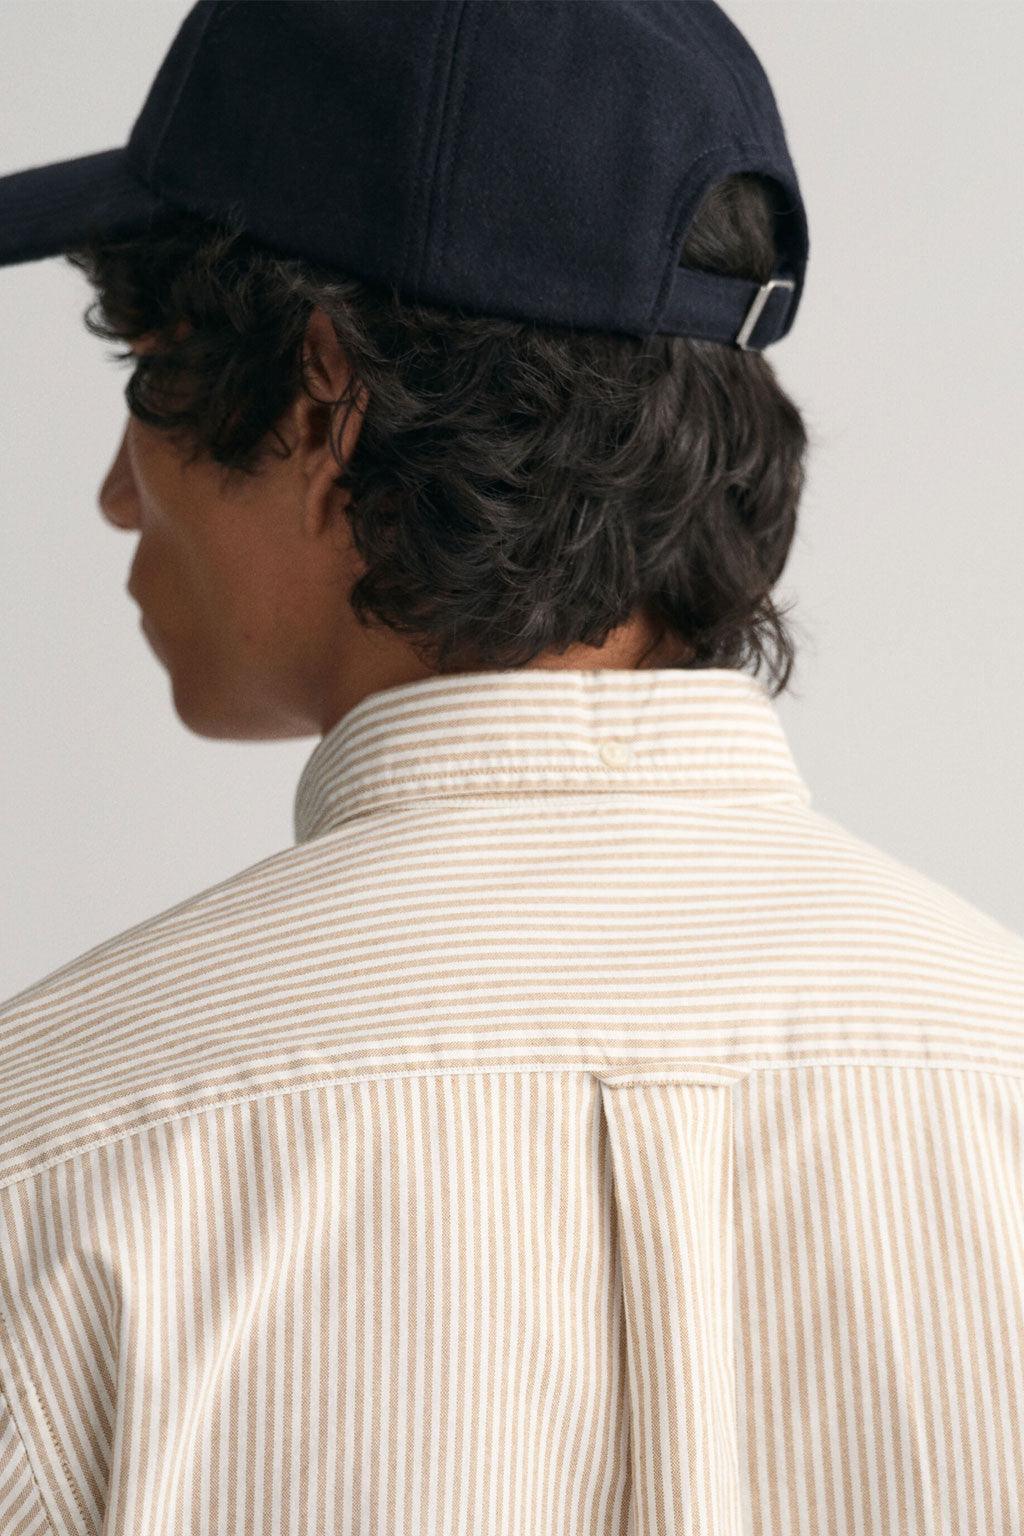 Gant overhemd lange mouw - Big Boss | the menswear concept